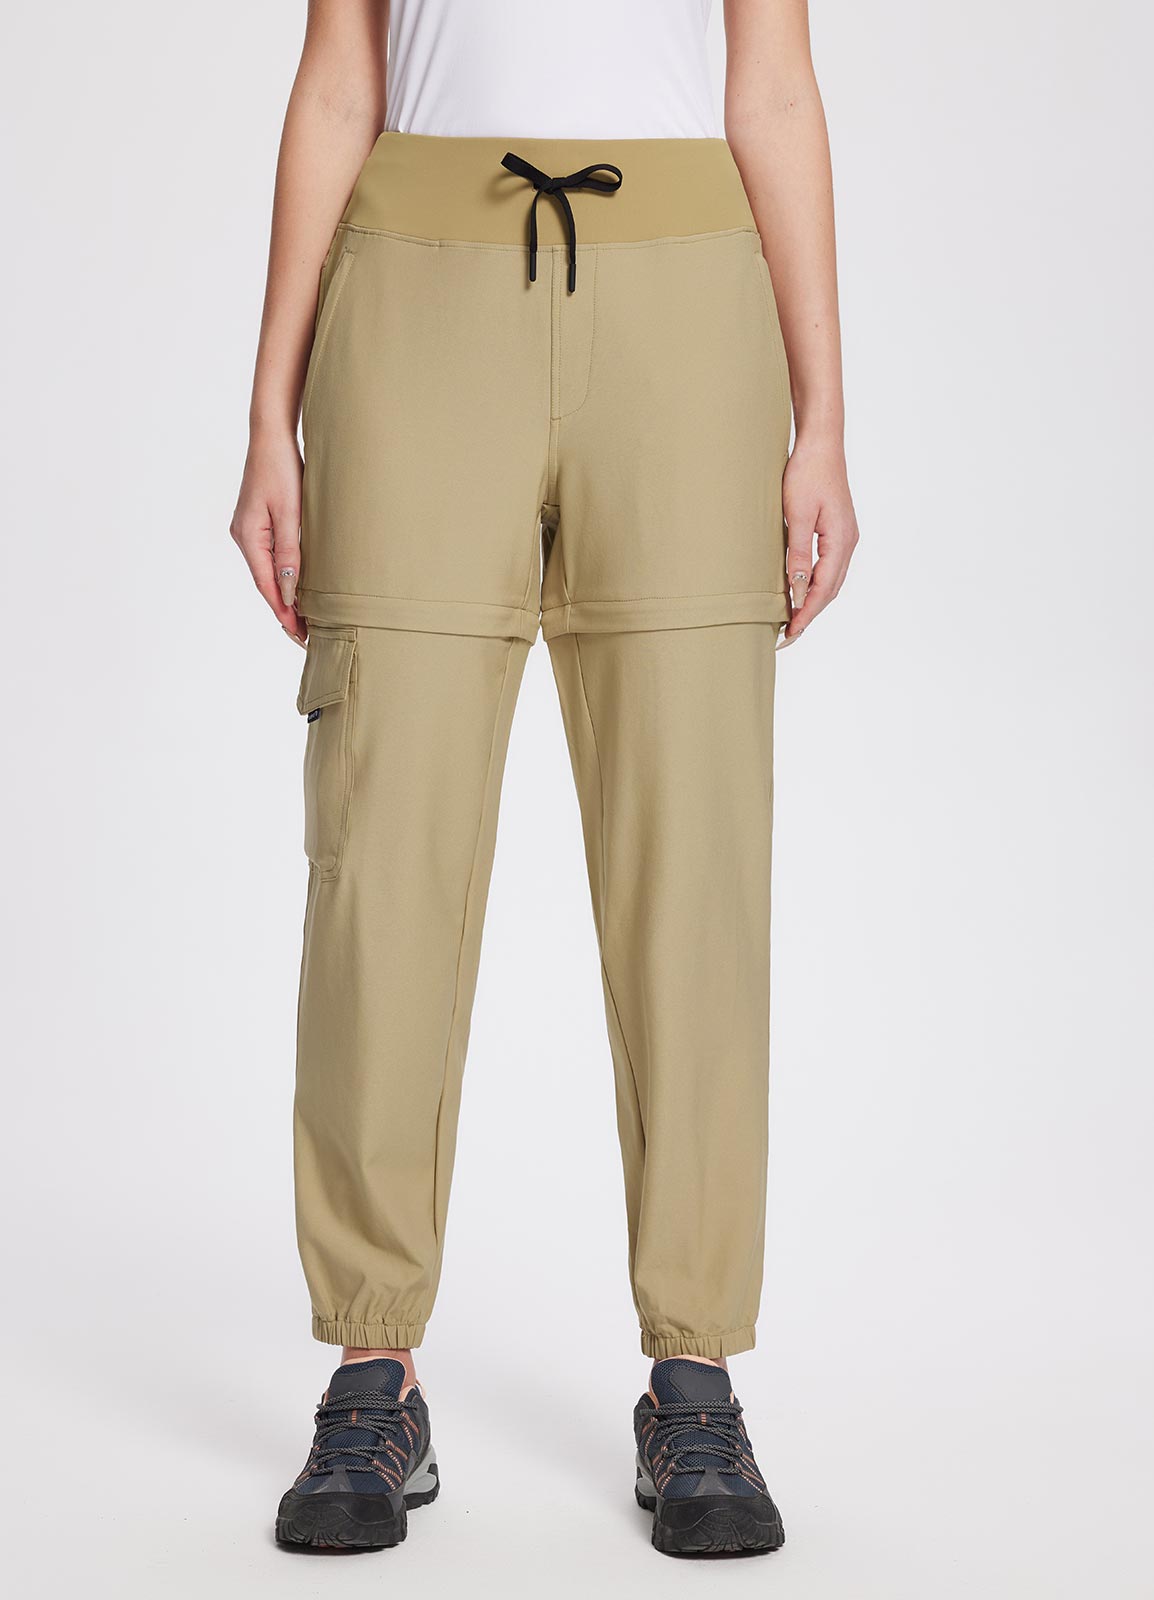 BALEAF Women's Hiking Pants Quick Dry with Zipper Pockets Running Yoga  Dark-Grey Size M 